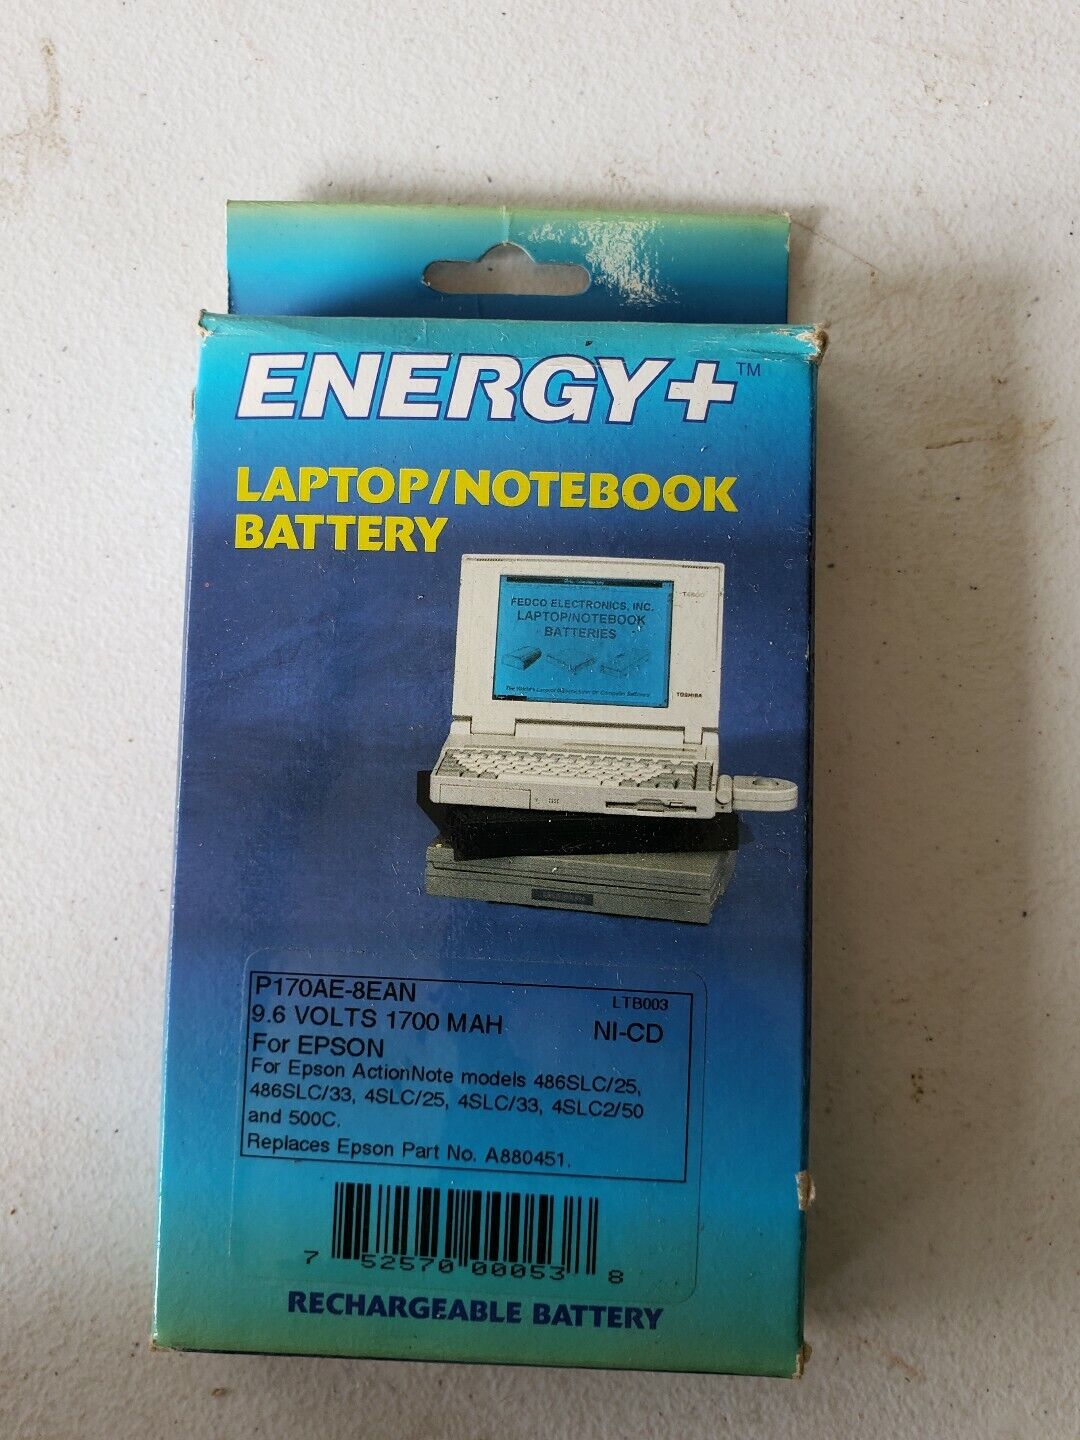 Vintage Epson ActionNote 4SLC/33,/25, 486slc/25,/33, 4slc2/50, 500c battery